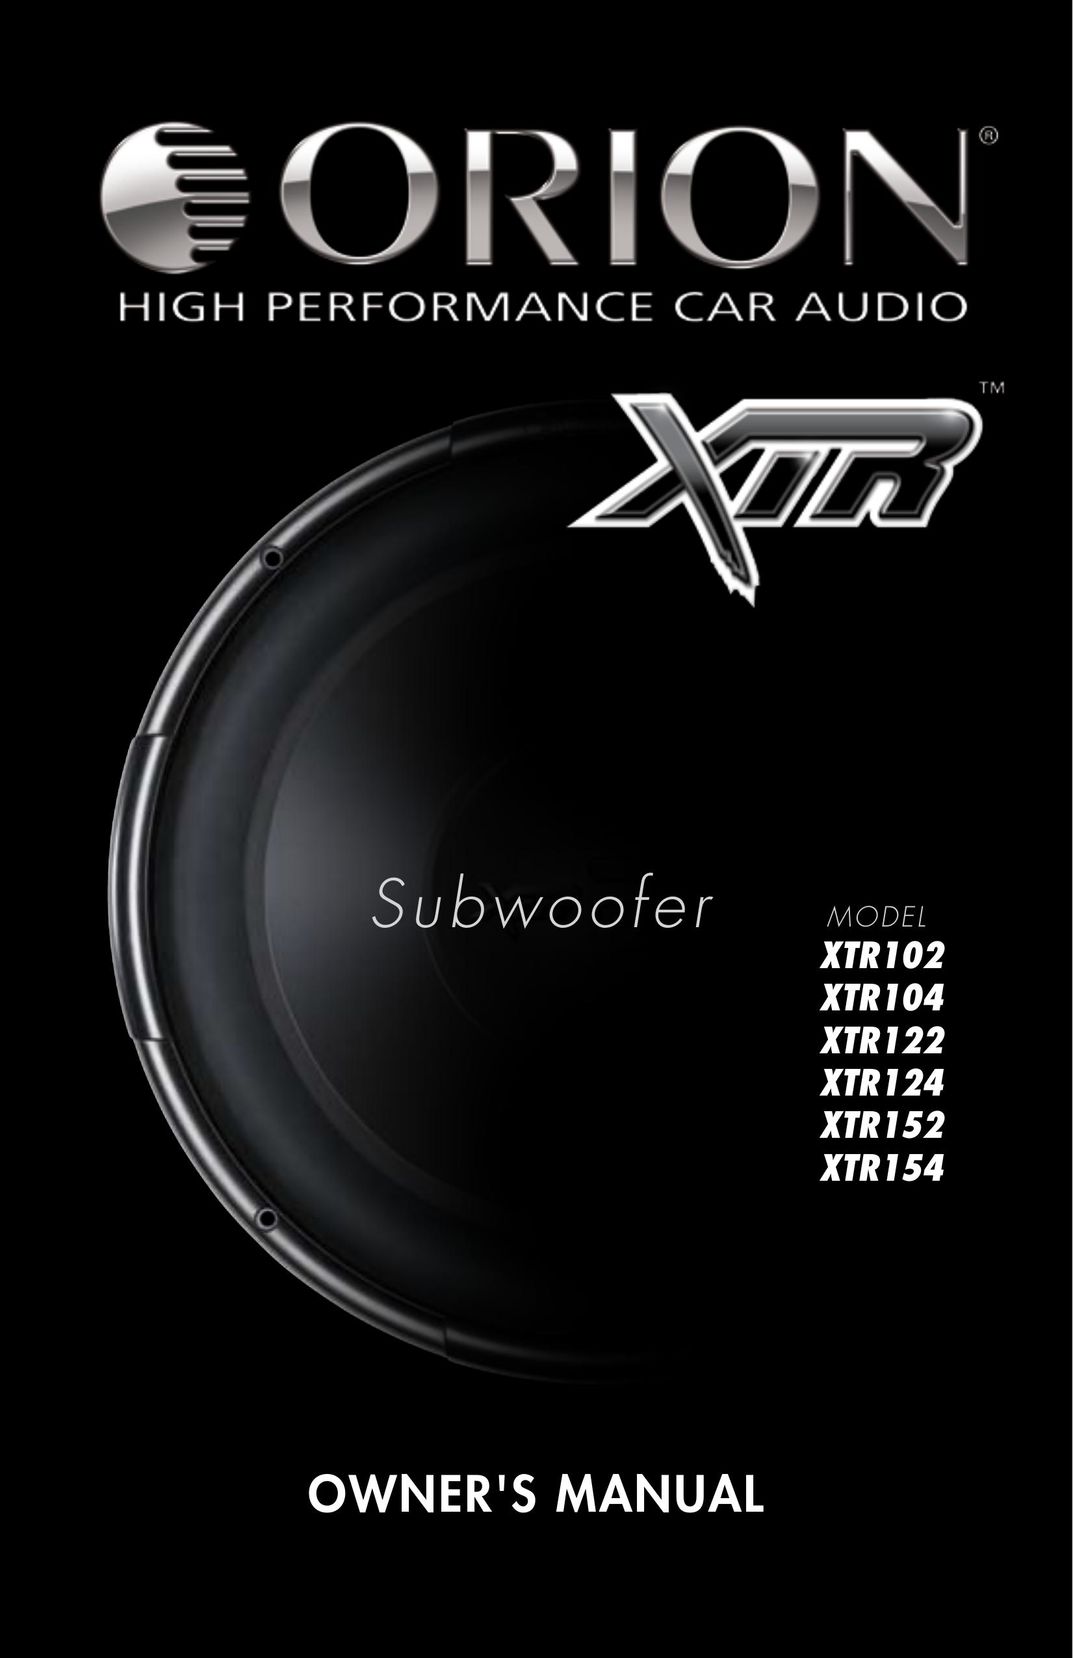 Orion Car Audio XTR152 Speaker User Manual